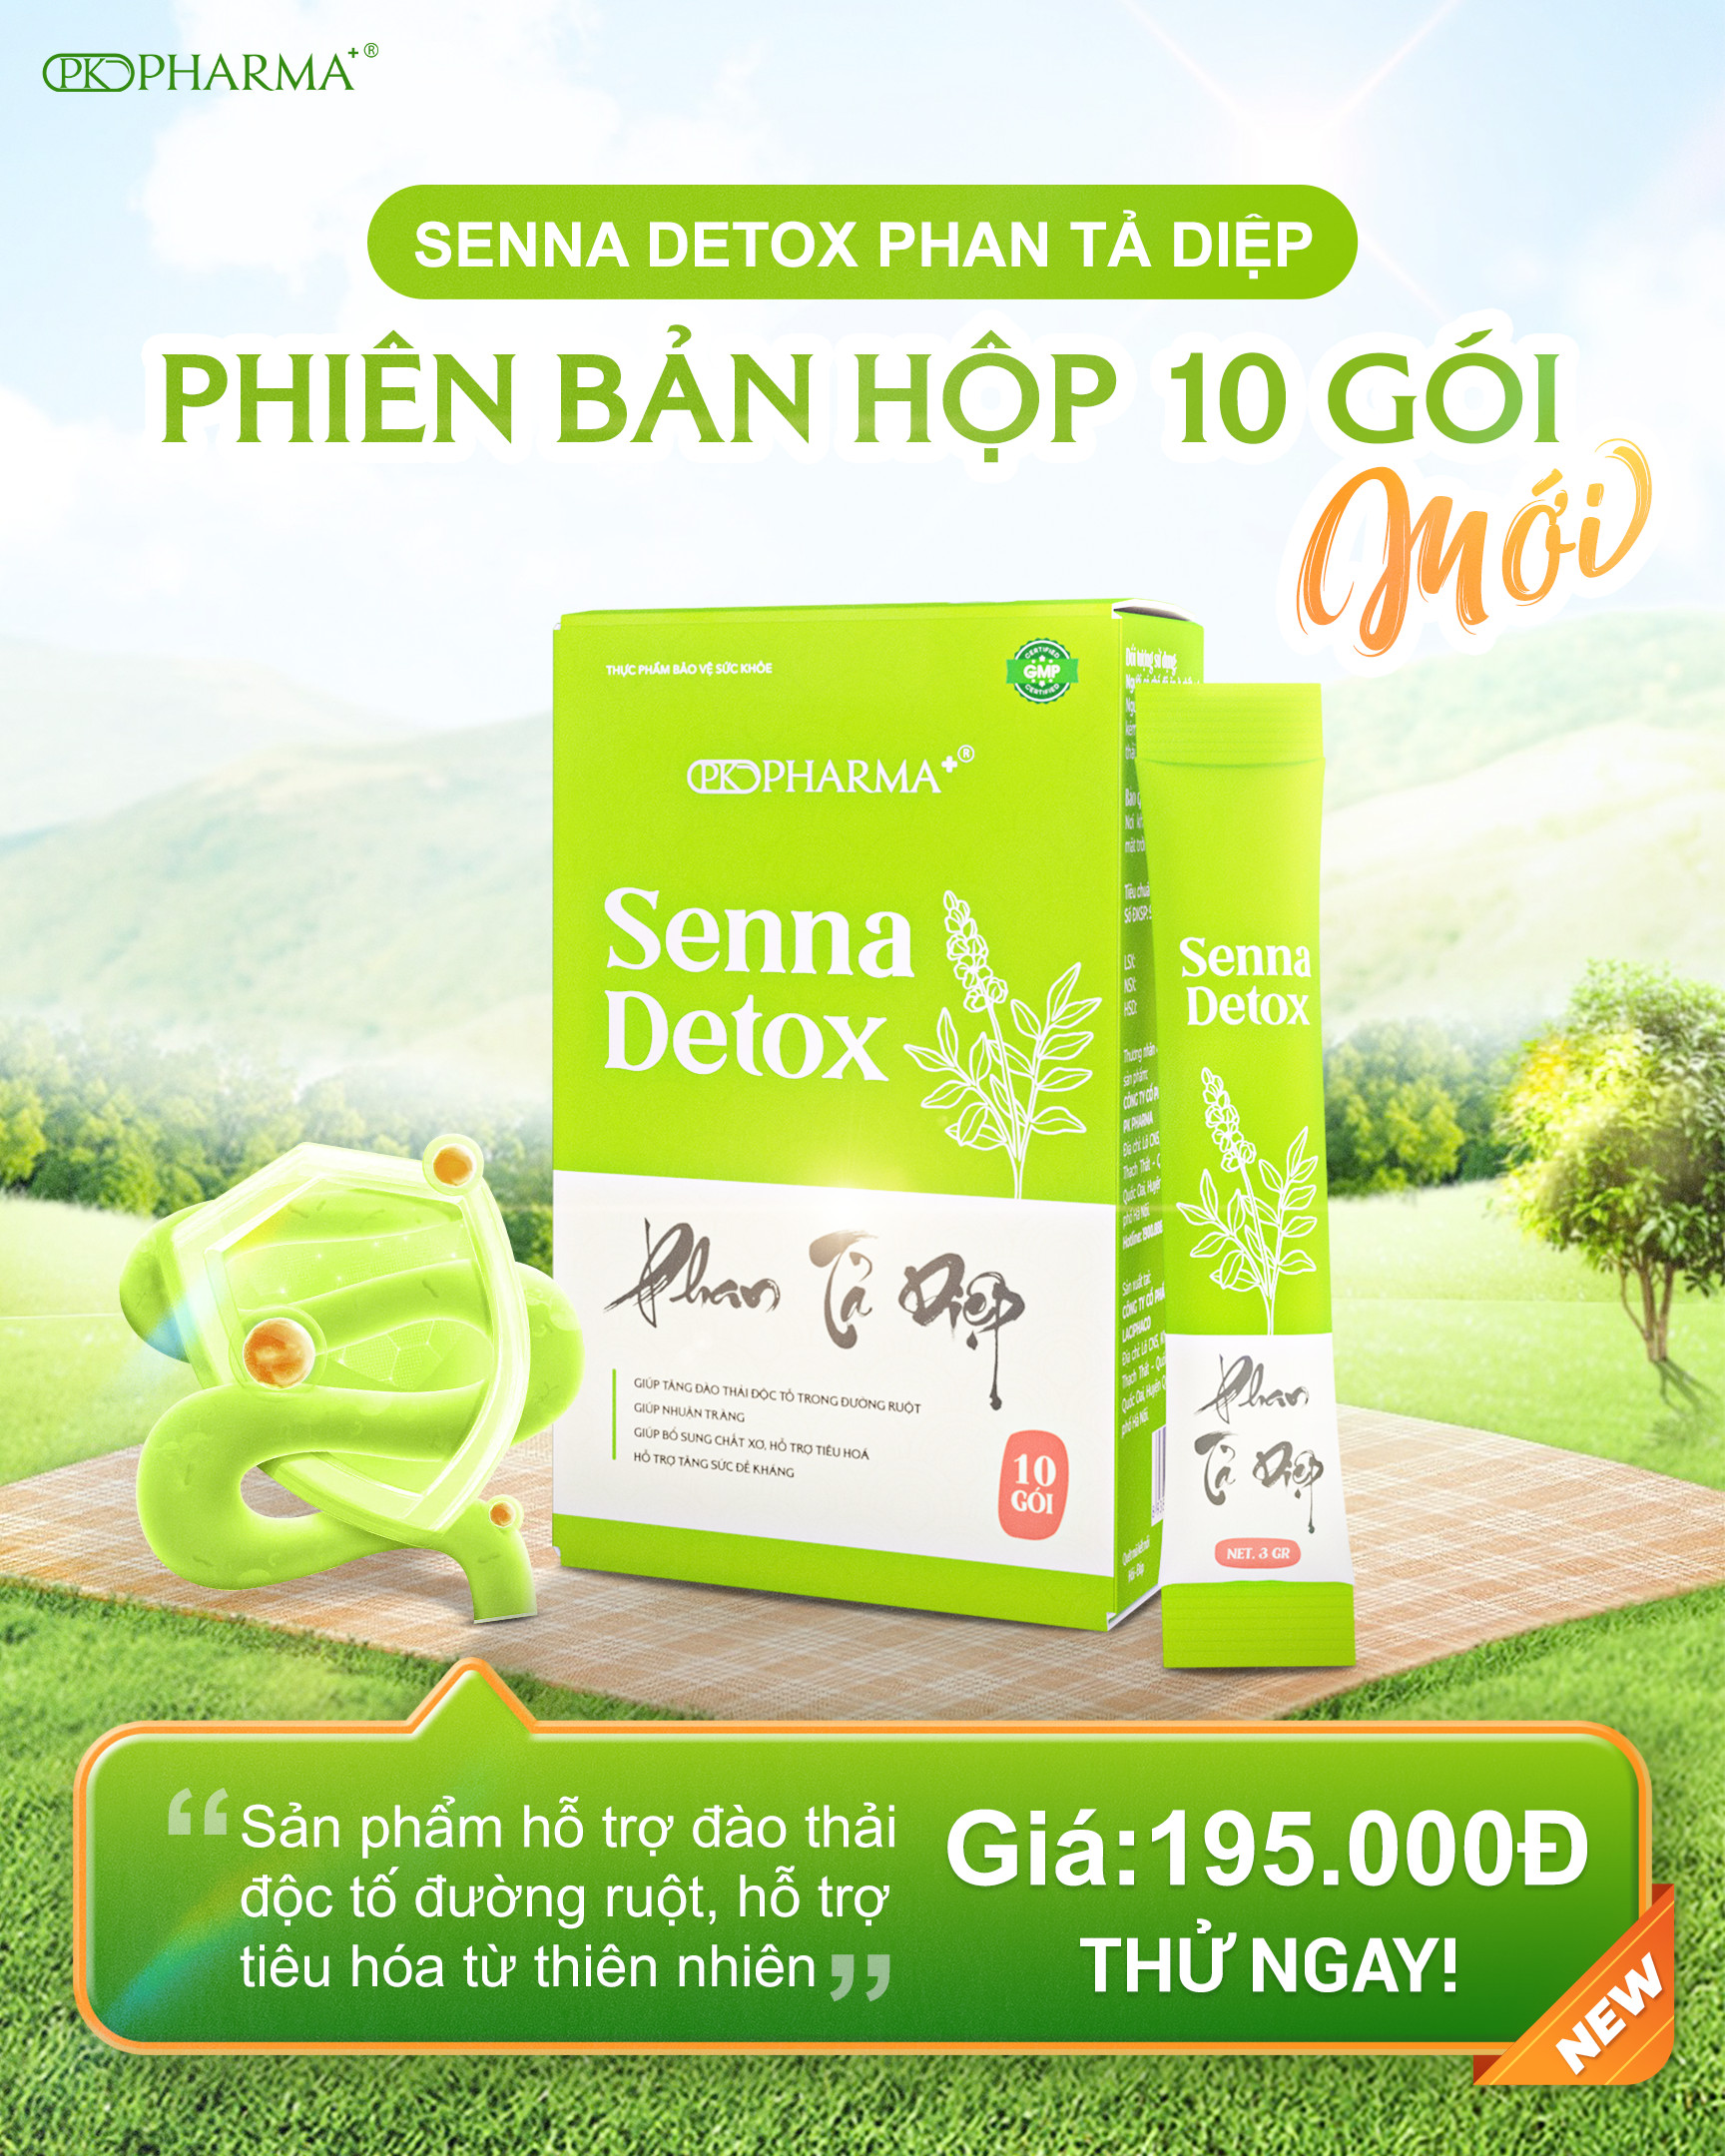 phan-ta-diep-senna-detox-pk-pharma-vi-thuoc-giup-nhuan-trang-tri-tao-bon-thai-doc-ruot